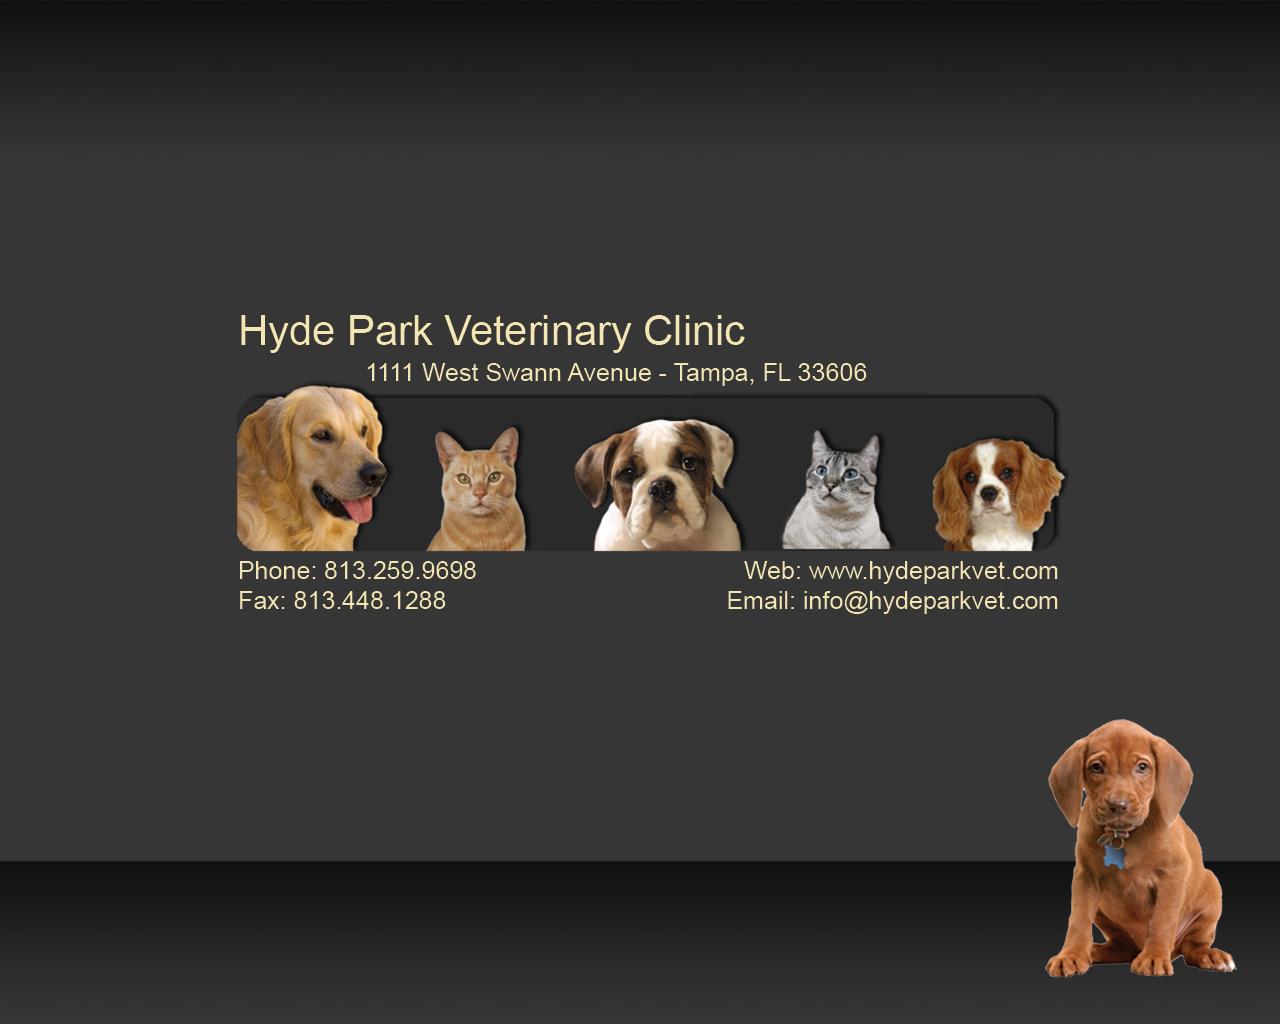 Hyde Park Veterinary Clinic